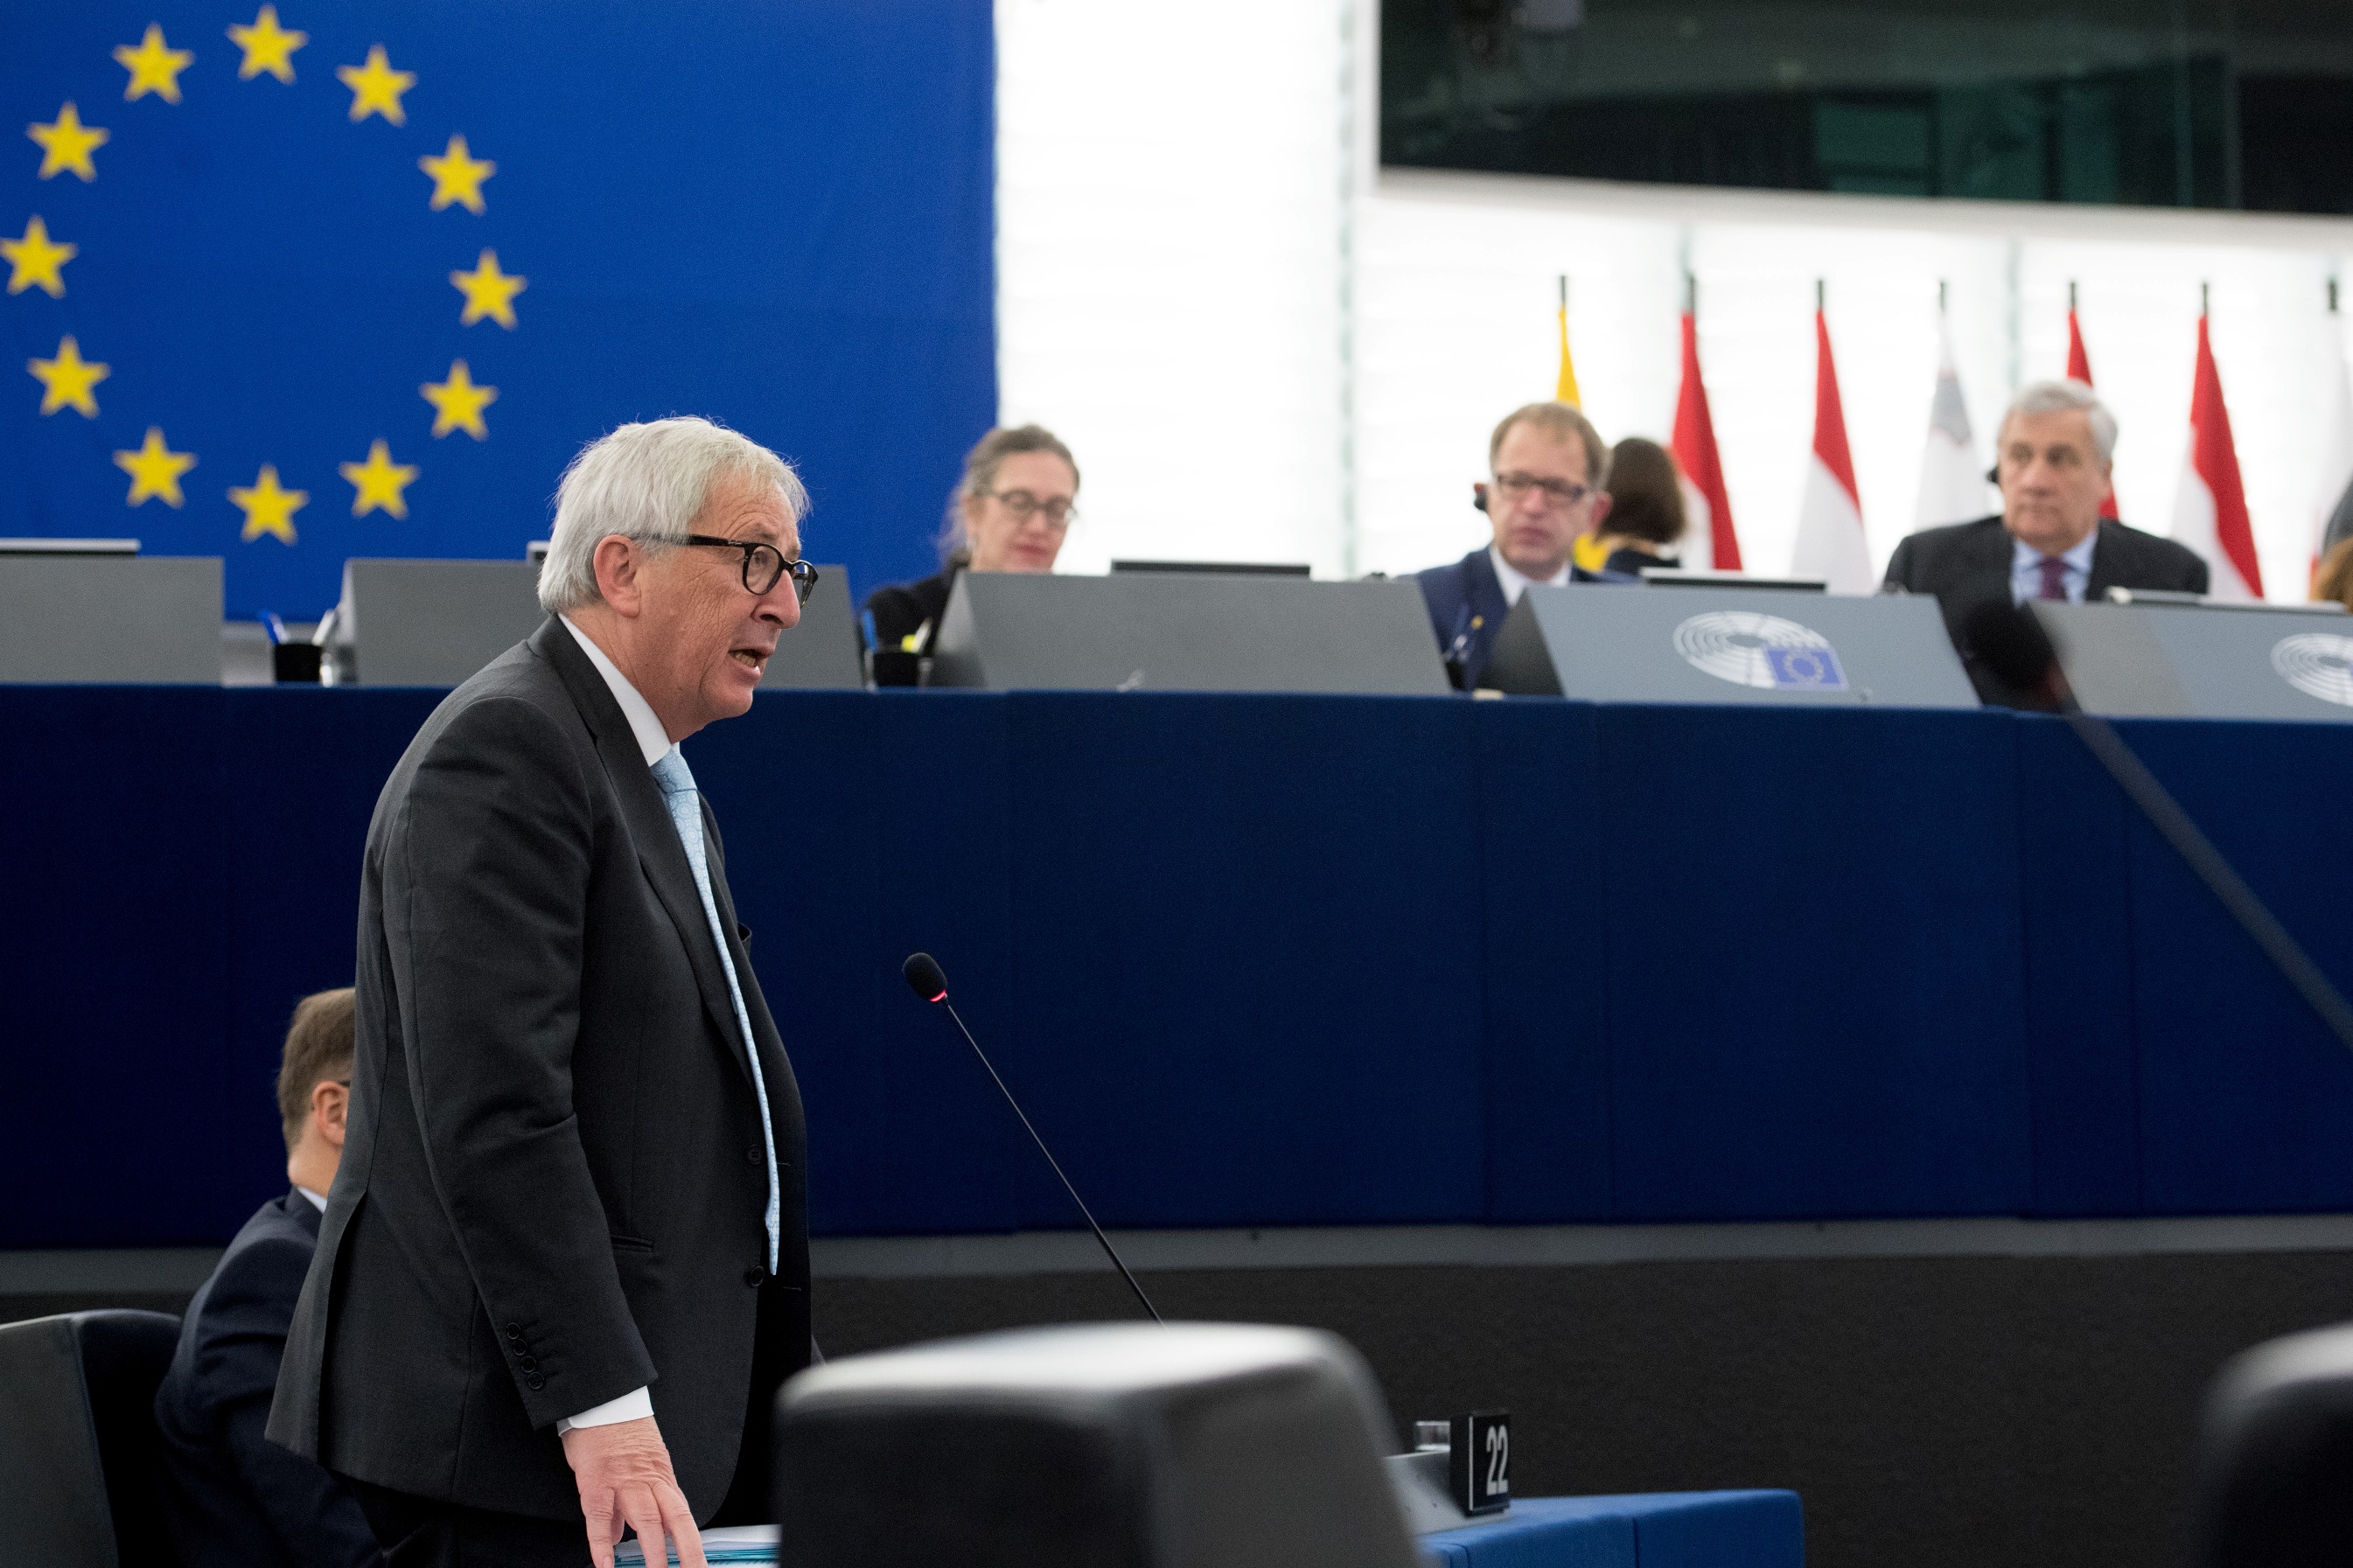 European Commission President Jean-Claude Juncker speaking in the EP in Strasbourg